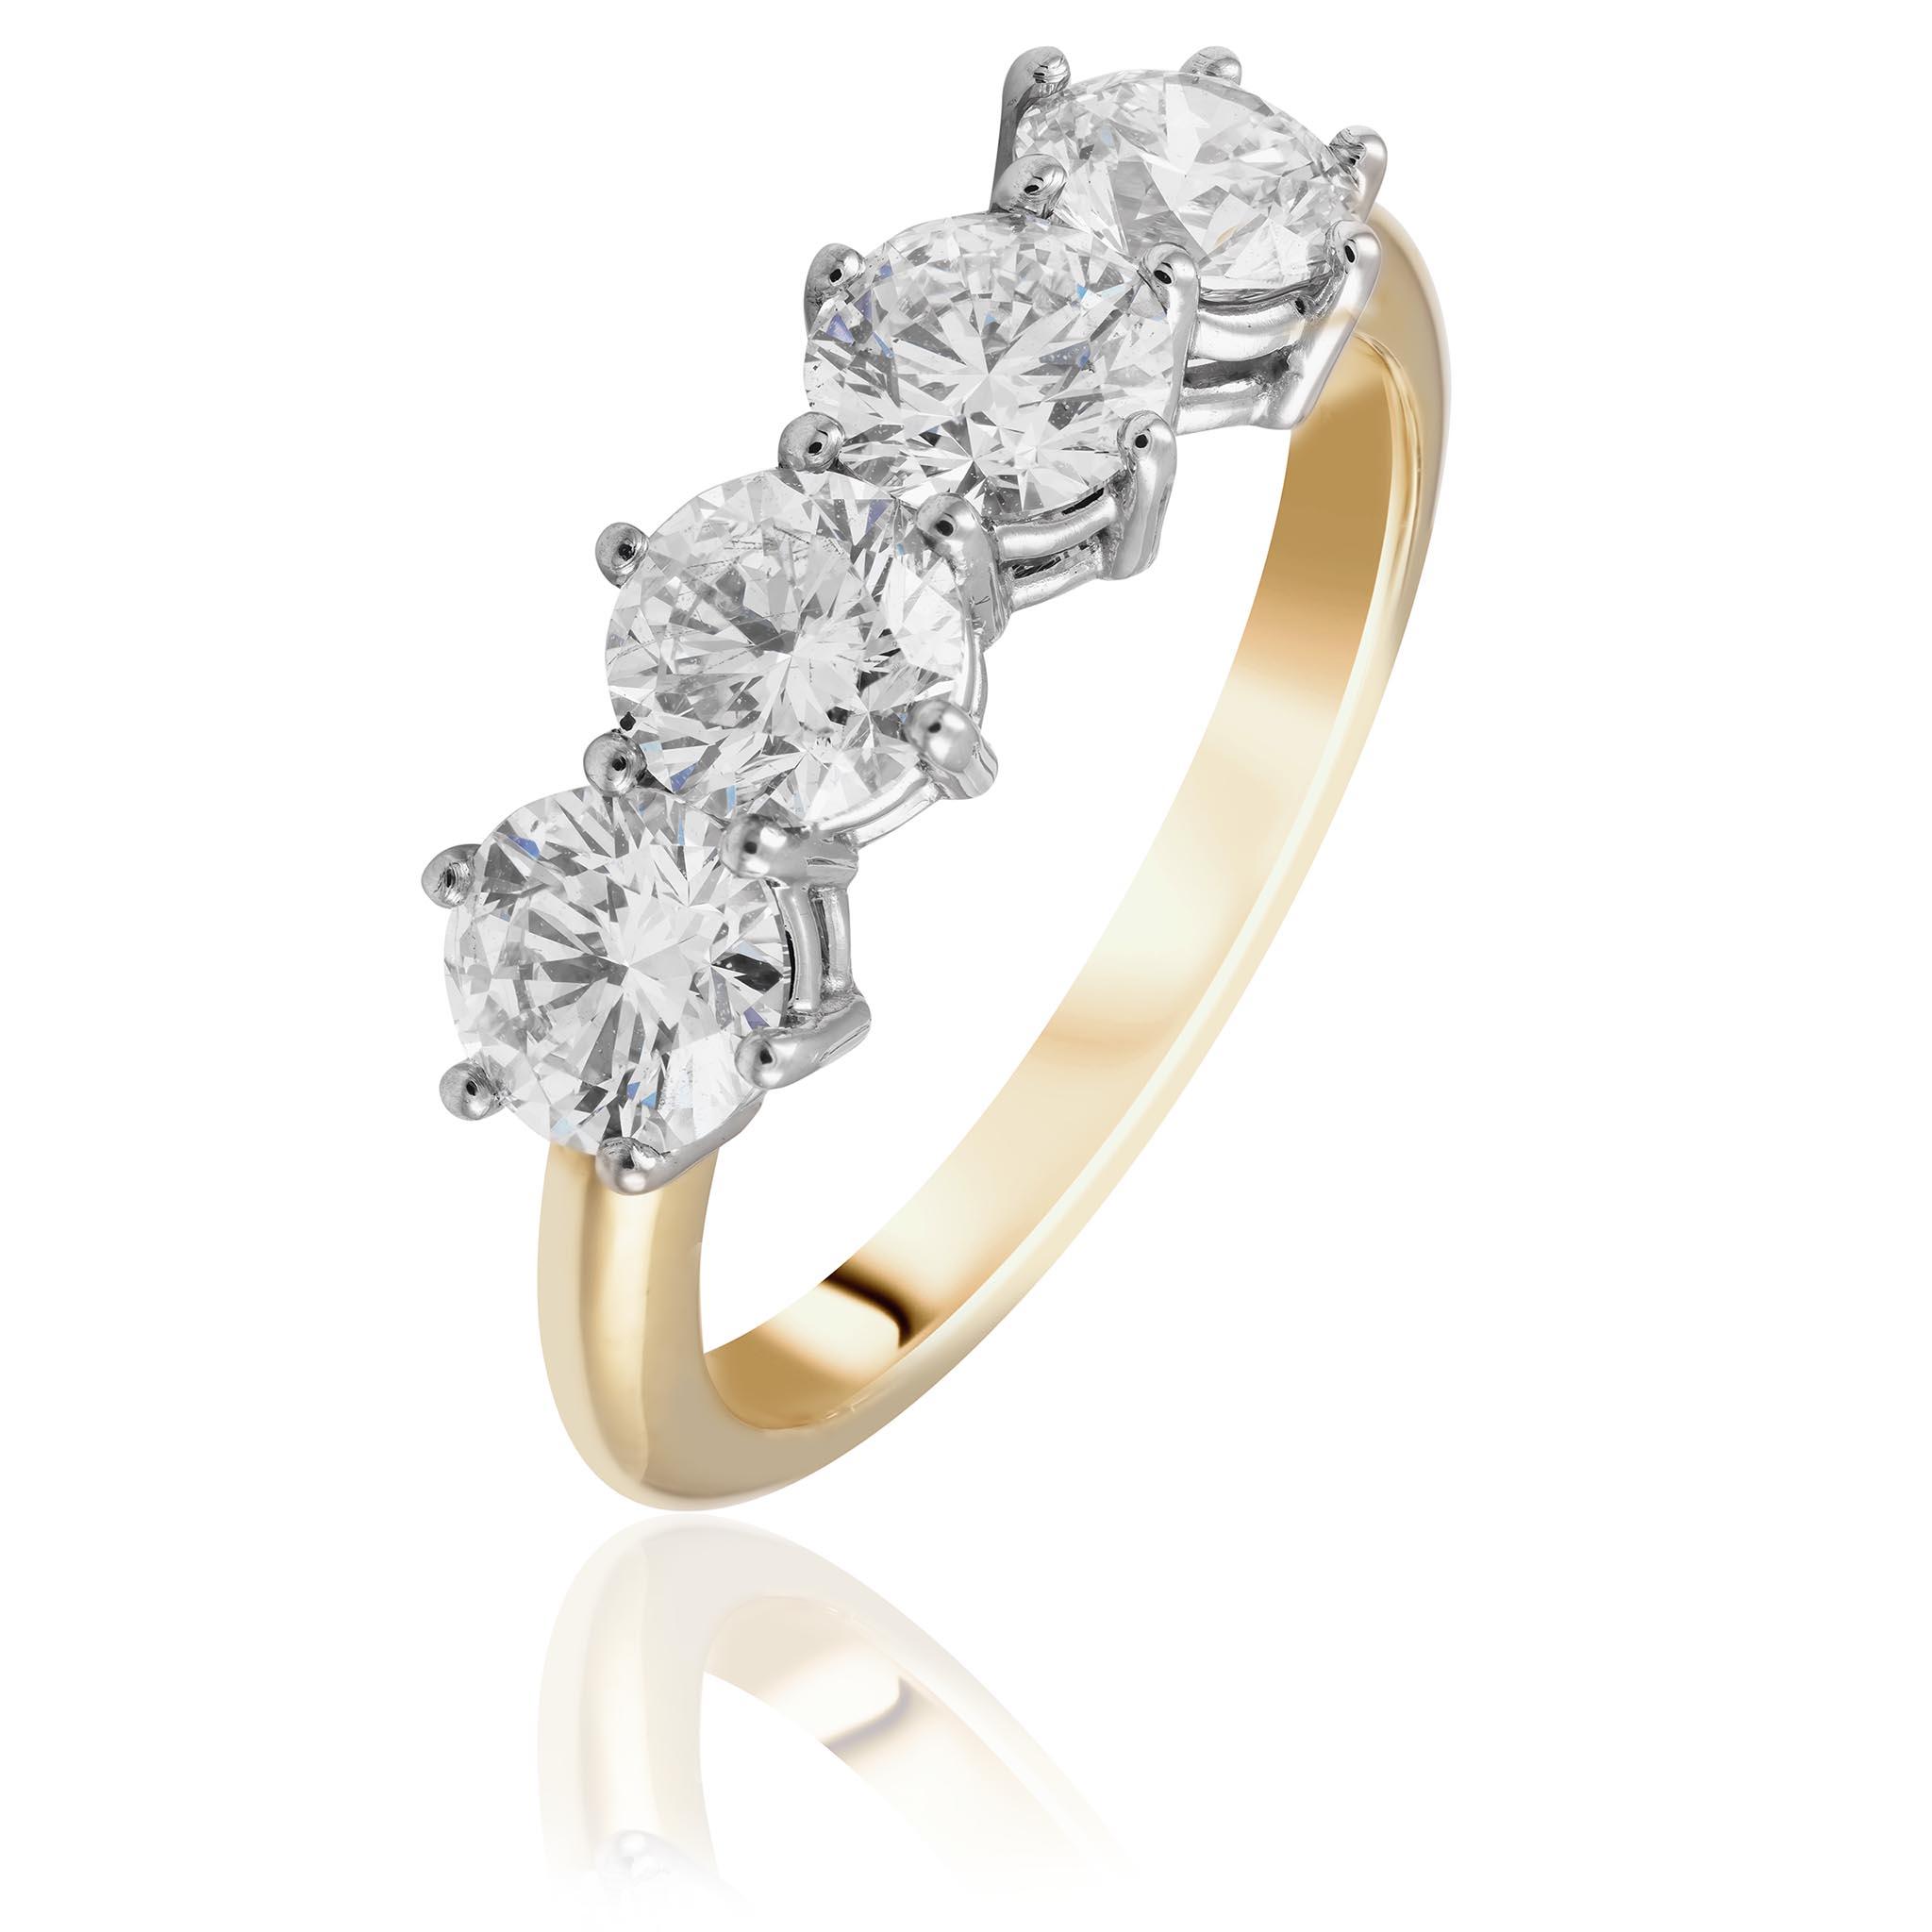 DreamStone THREE STONE PEAR SHAPE DIAMOND ENGAGEMENT RING in 18K White Gold  - DreamStone